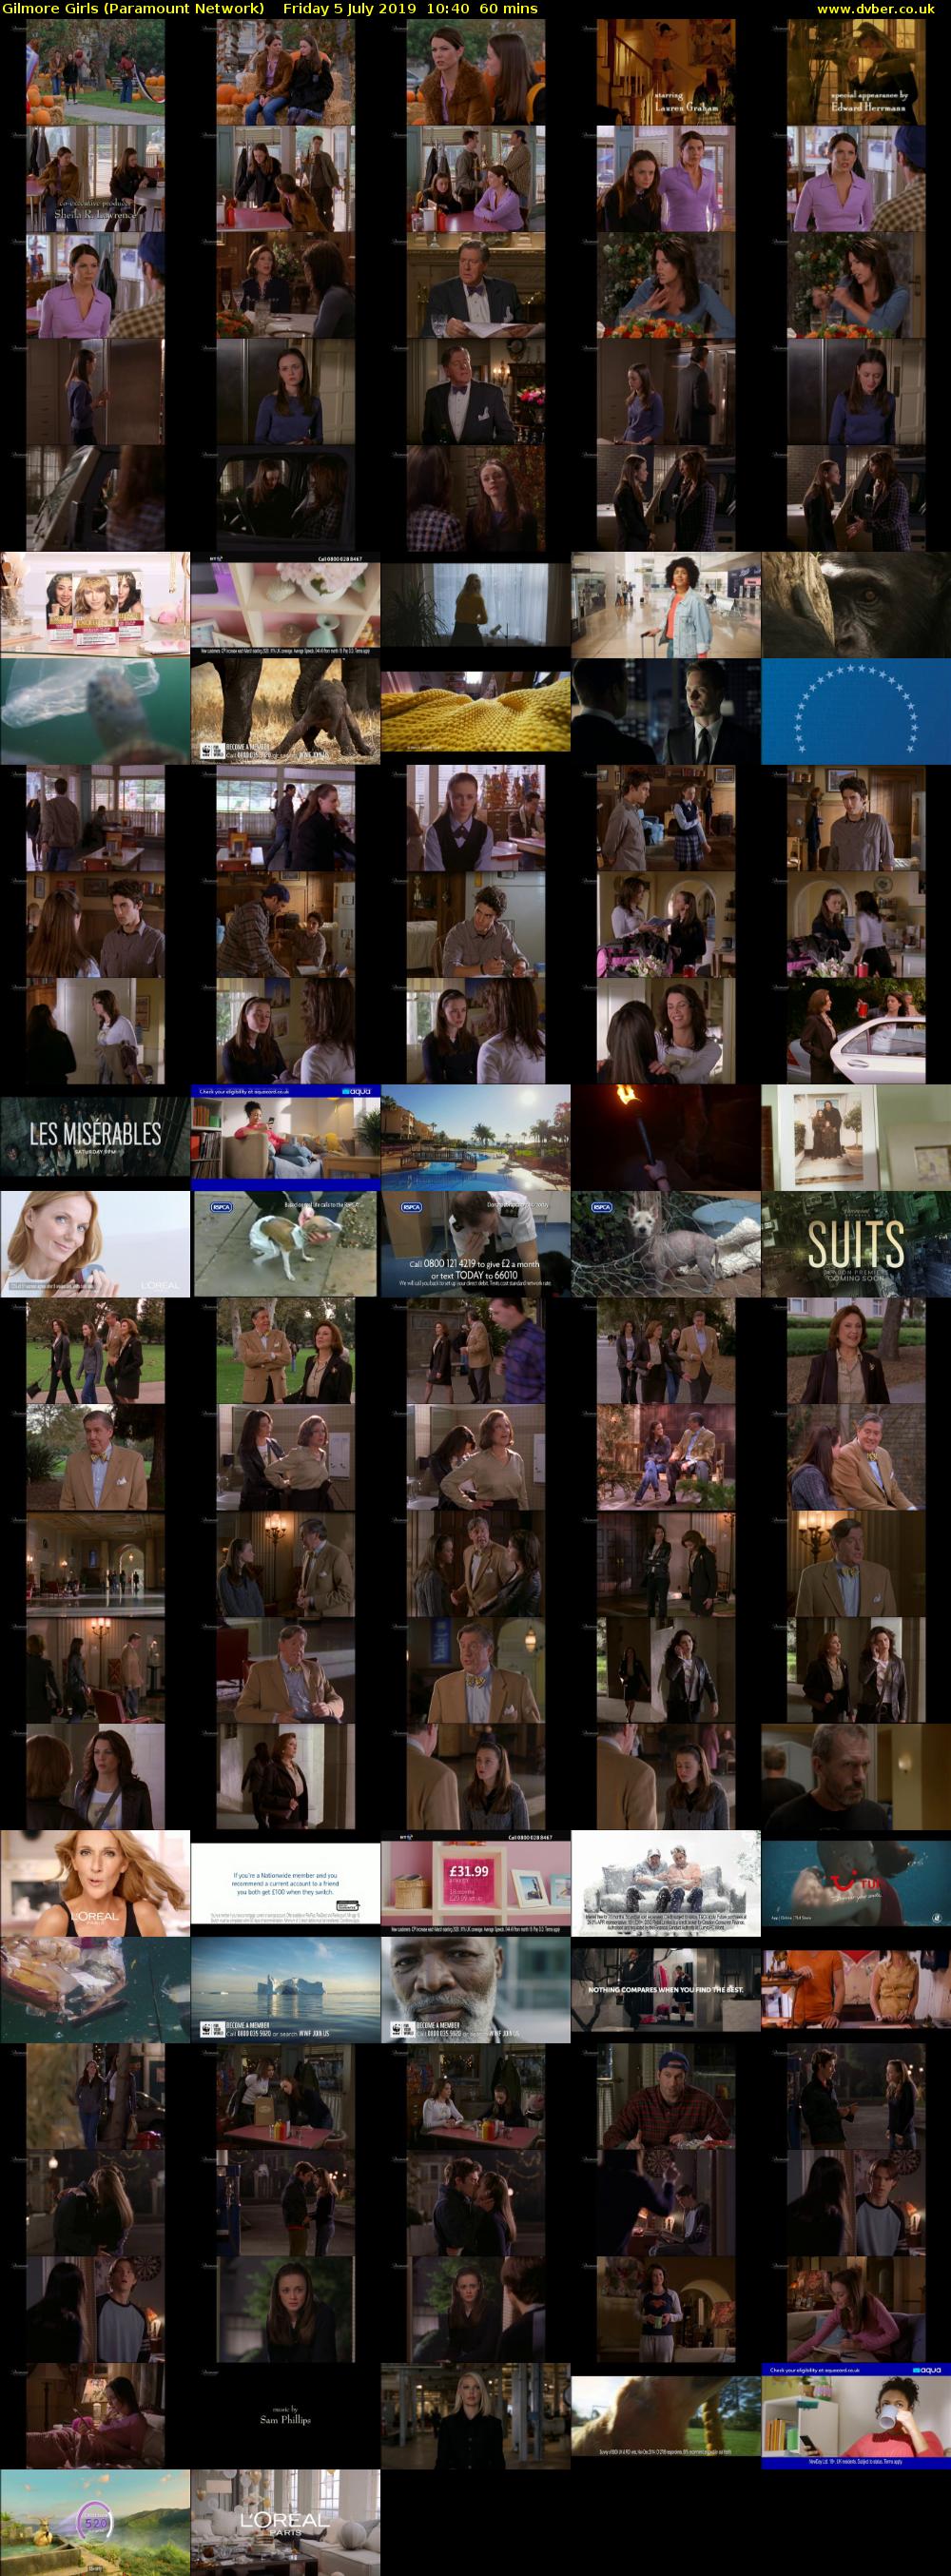 Gilmore Girls (Paramount Network) Friday 5 July 2019 10:40 - 11:40